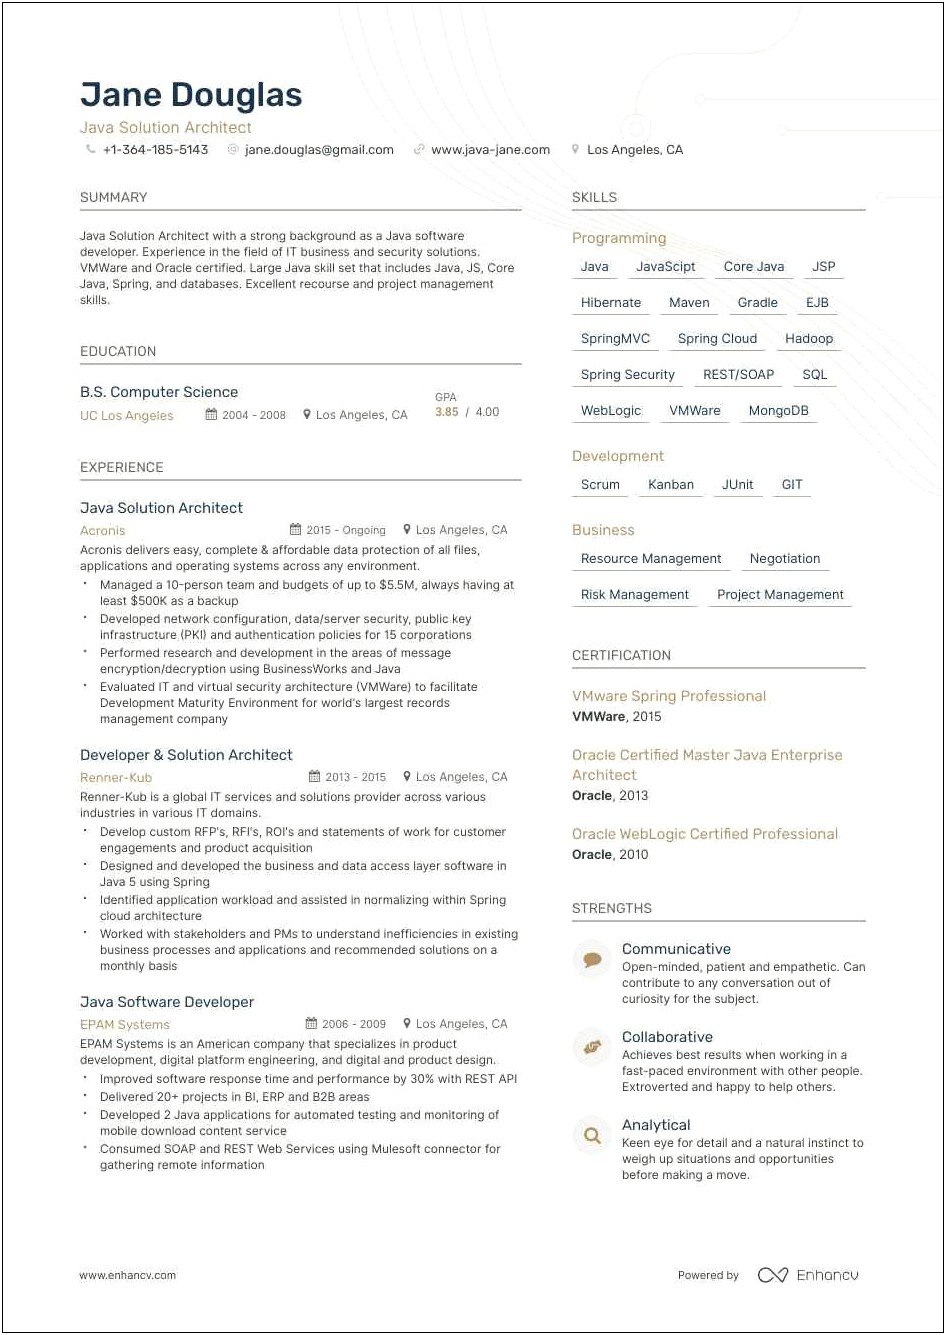 Sample Resume Of Net Technical Architect